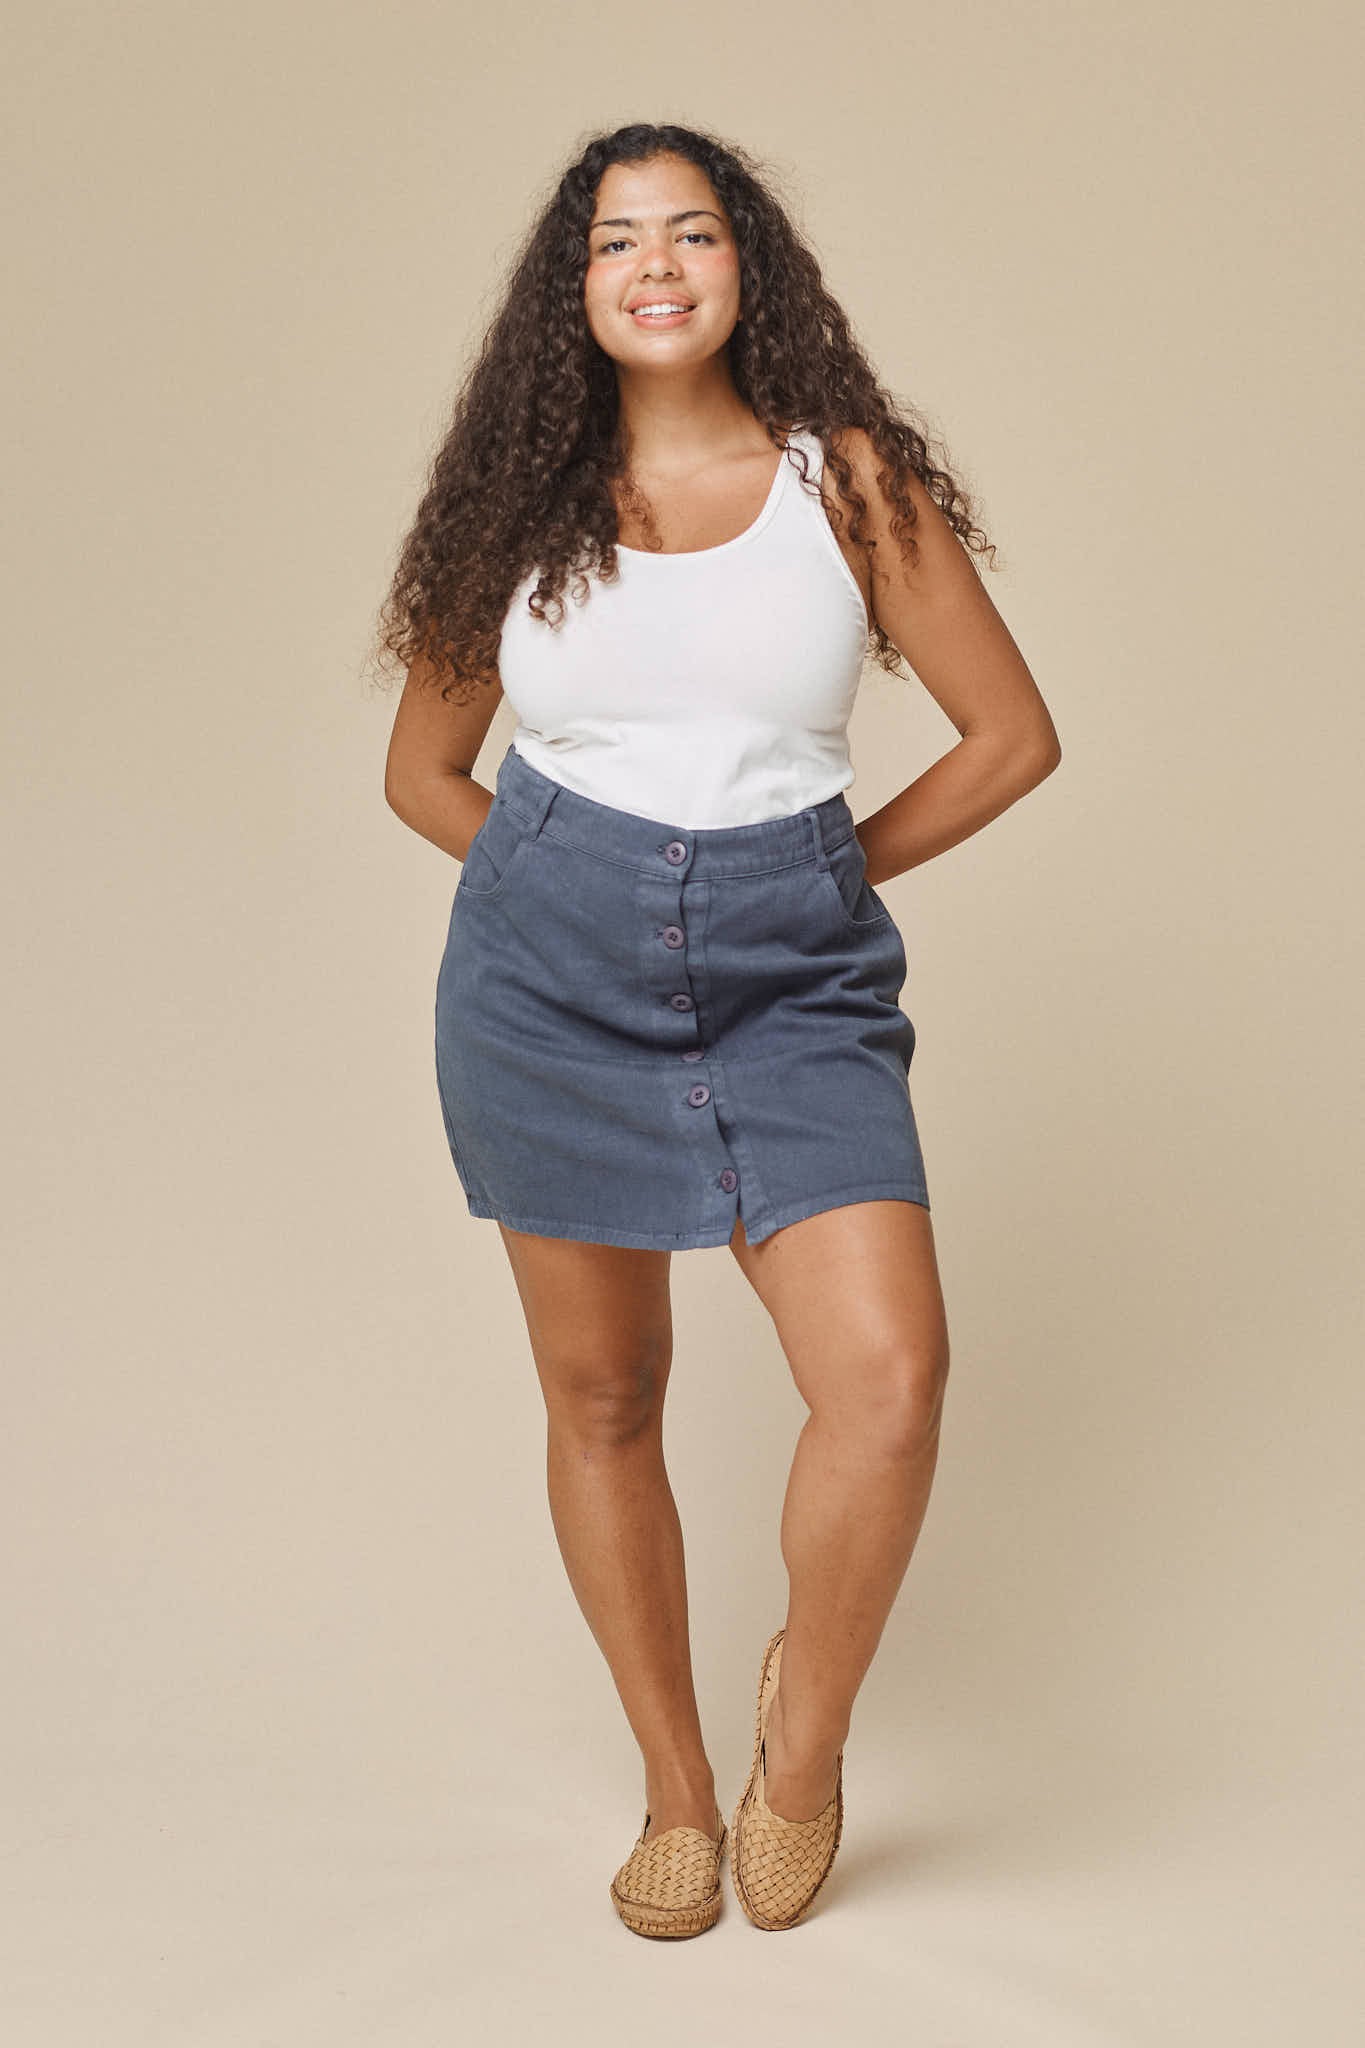 Vassar Skirt | Jungmaven Hemp Clothing & Accessories / model_desc: Nikki is 5’2” wearing L